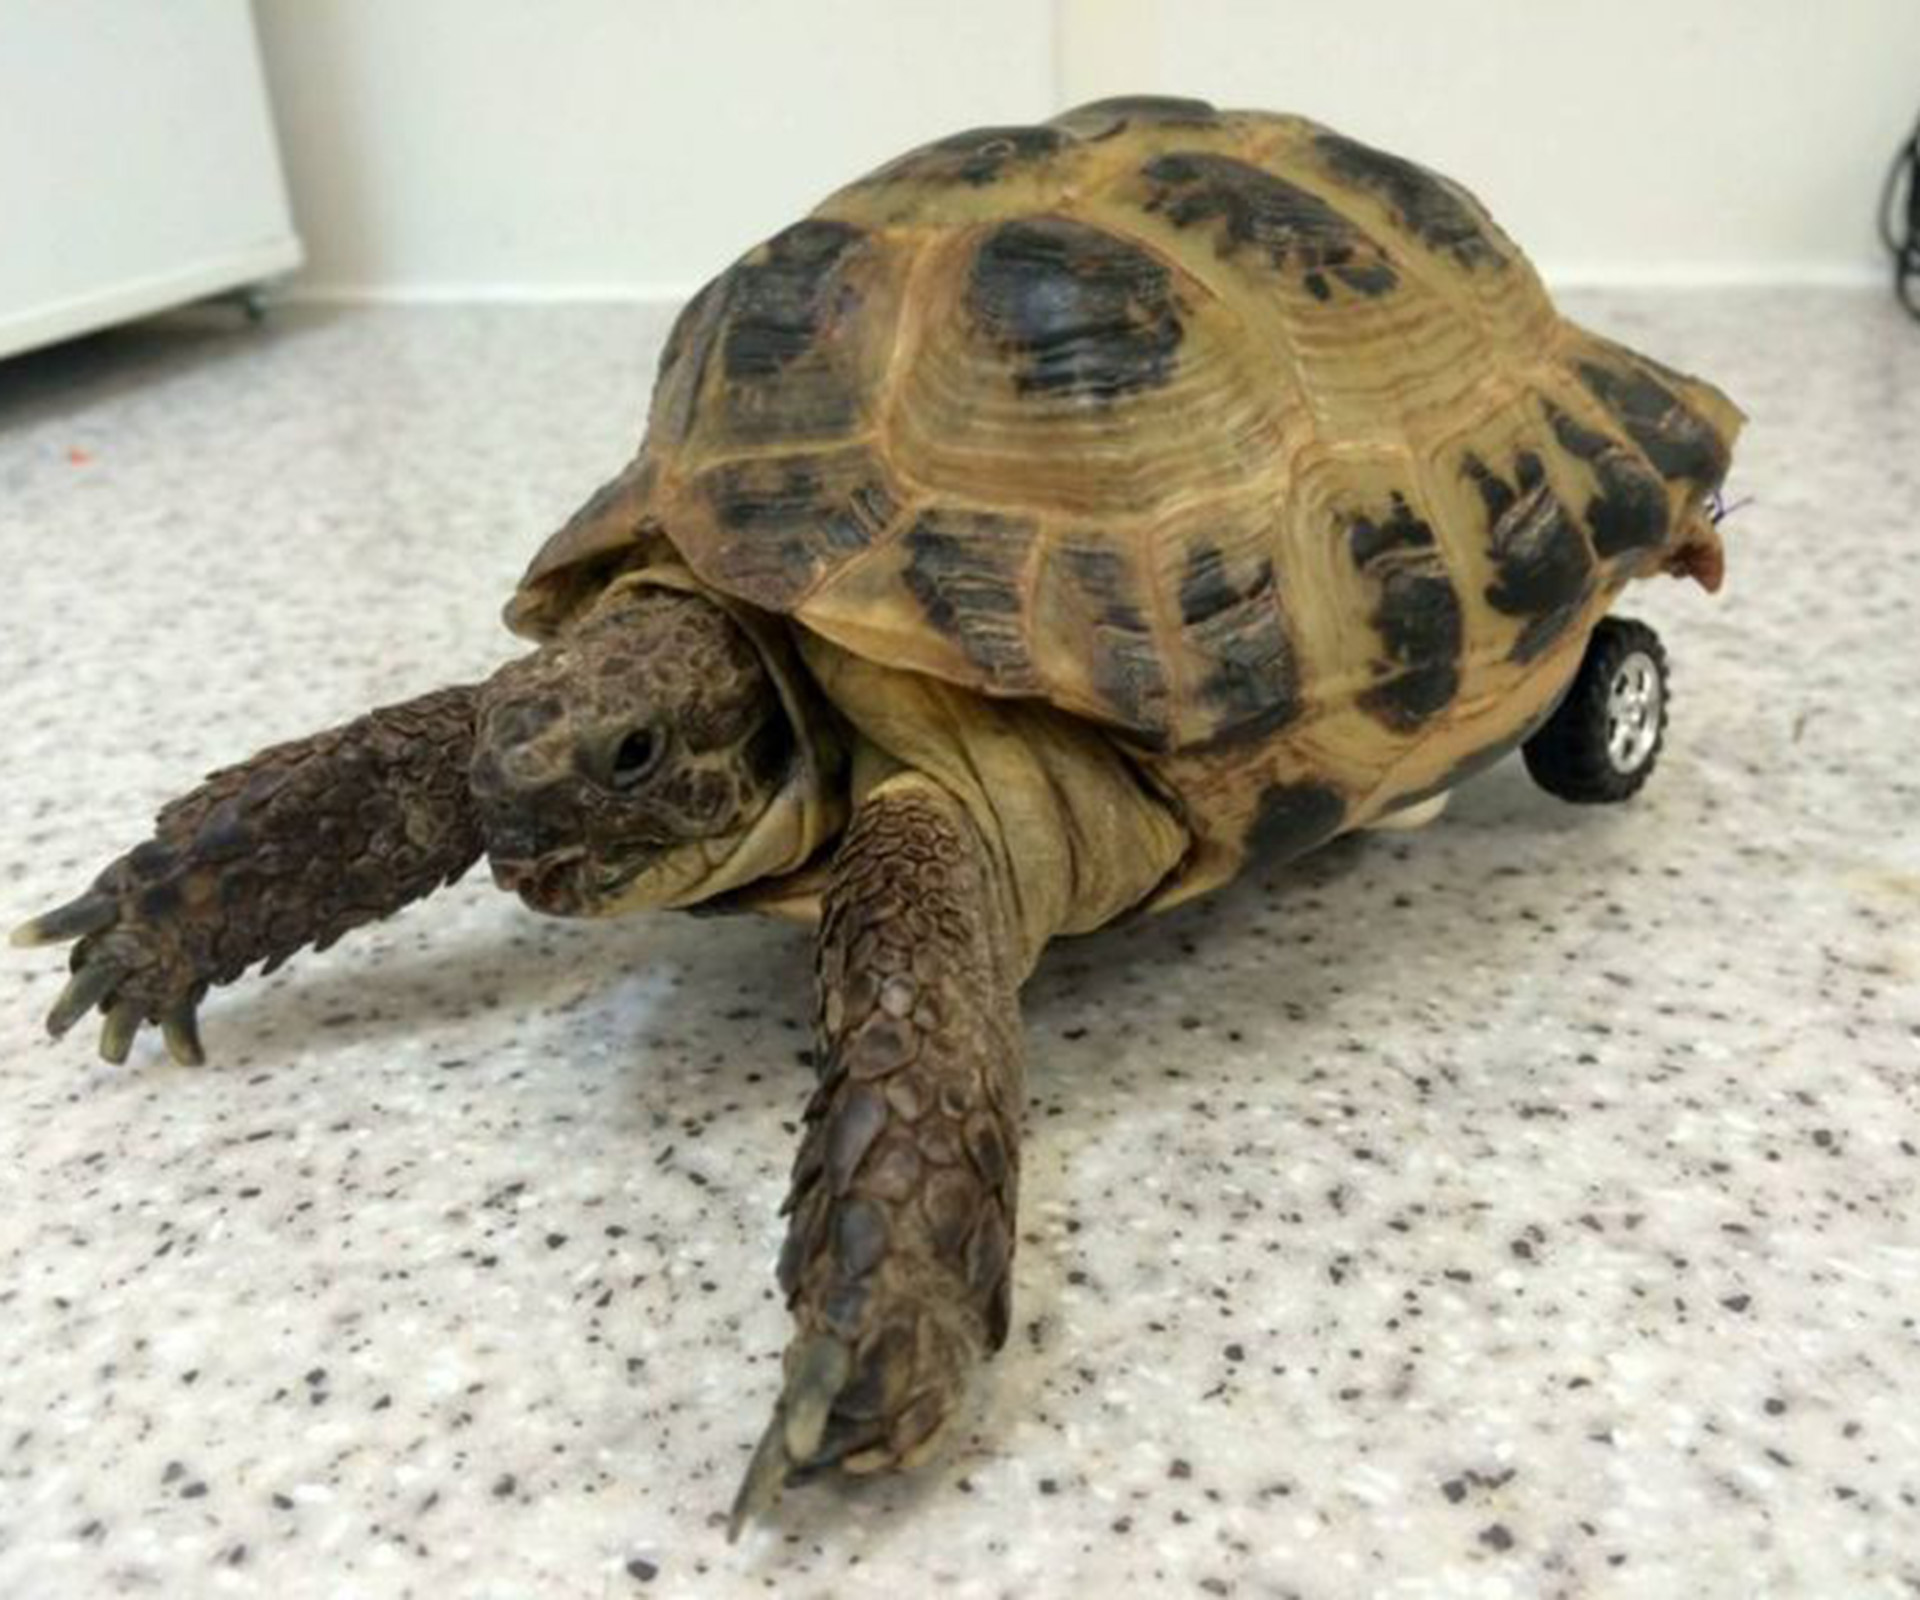 Hot Wheels car fitted to three-legged tortoise